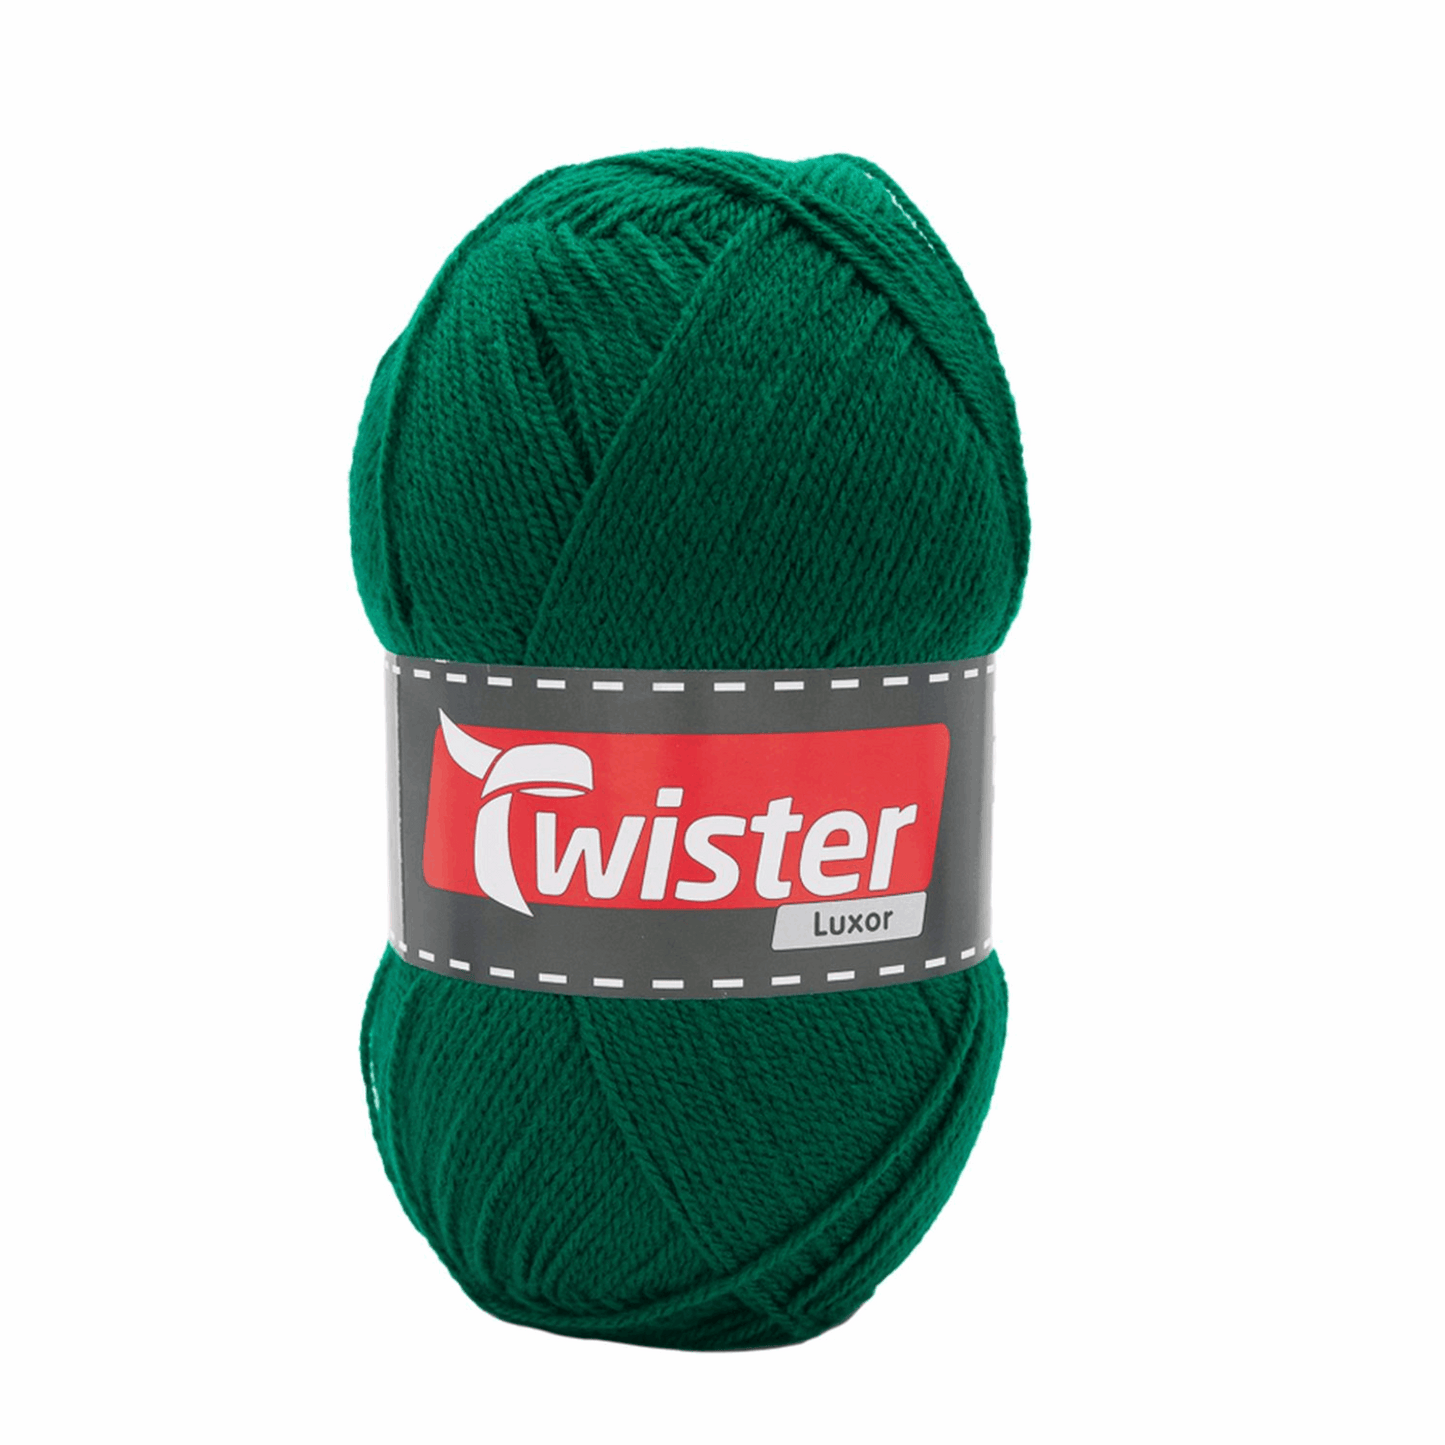 Twister Luxor, 98317, Farbe grün 76